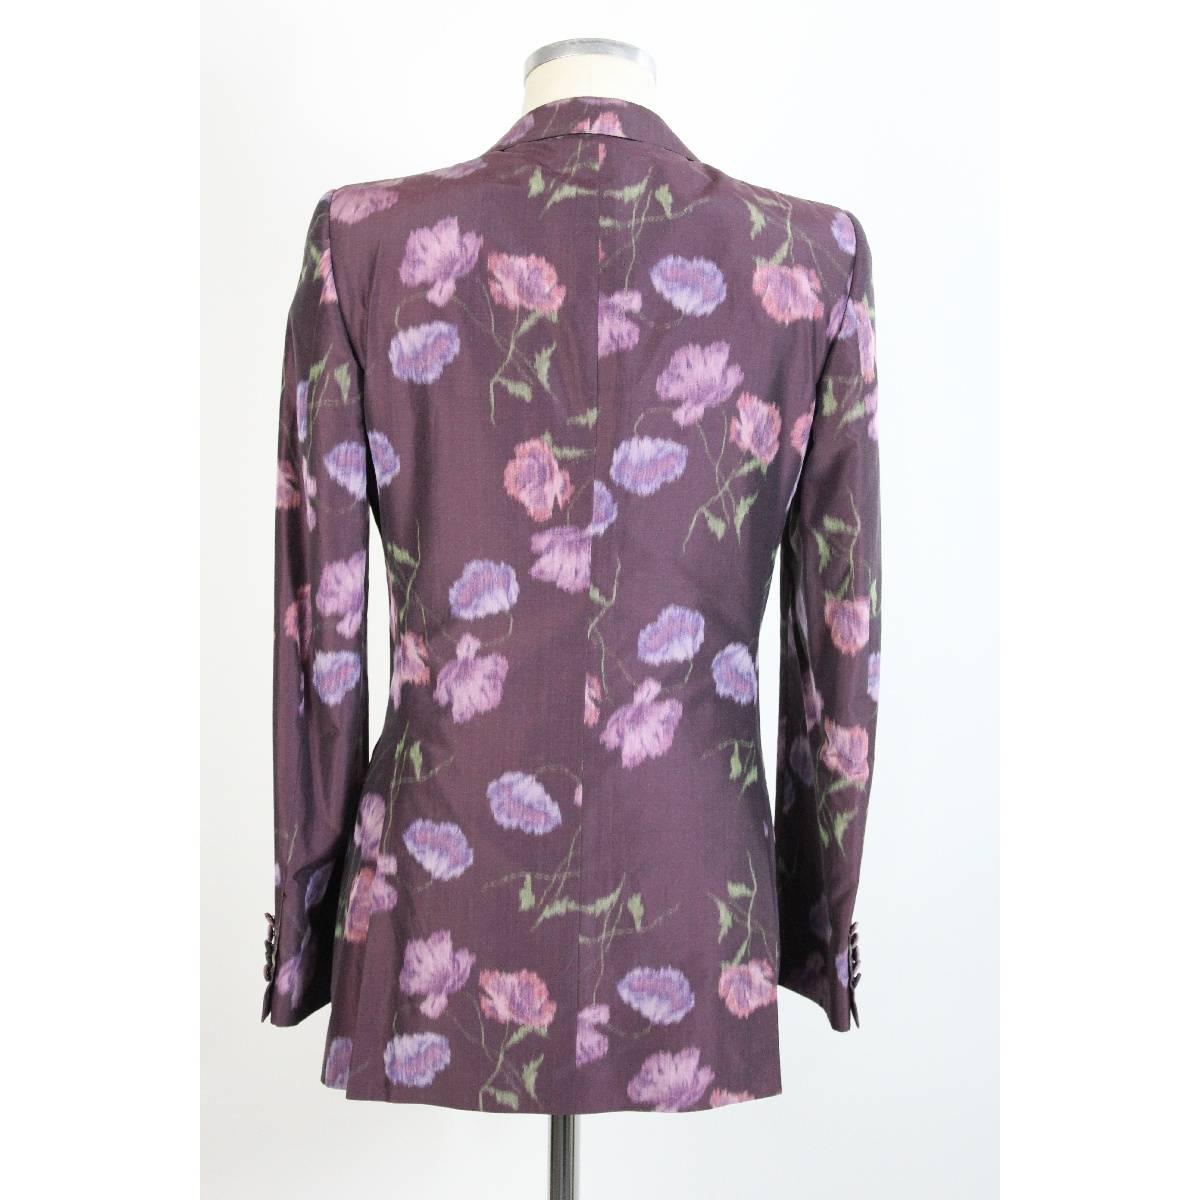 Gucci for Tom Ford velvet cotton purple flowers men's jacket, two front pockets and two slits, size 46 it, excellent condition.


Size 46 (IT); 36 US; 36 UK

Shoulder: 46 cm
Sleeve: 66
Length: 84 cm
Bust / Chest: 54 cm

Composition: 100%